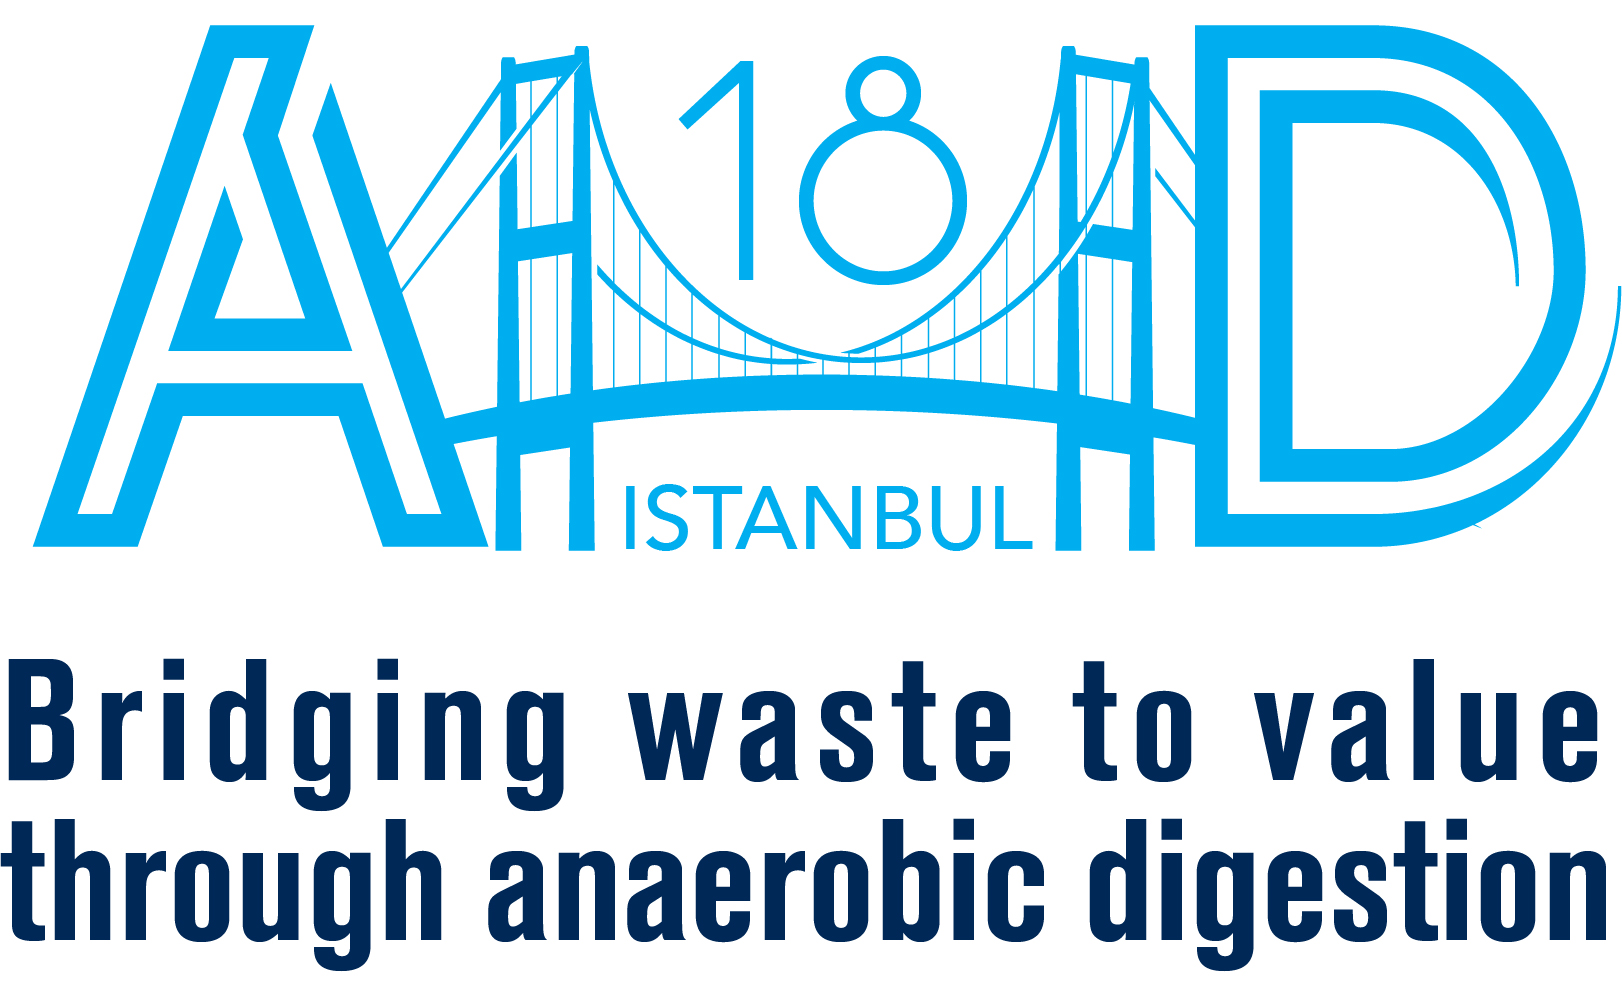 18th IWA World Conference on Anaerobic Digestion